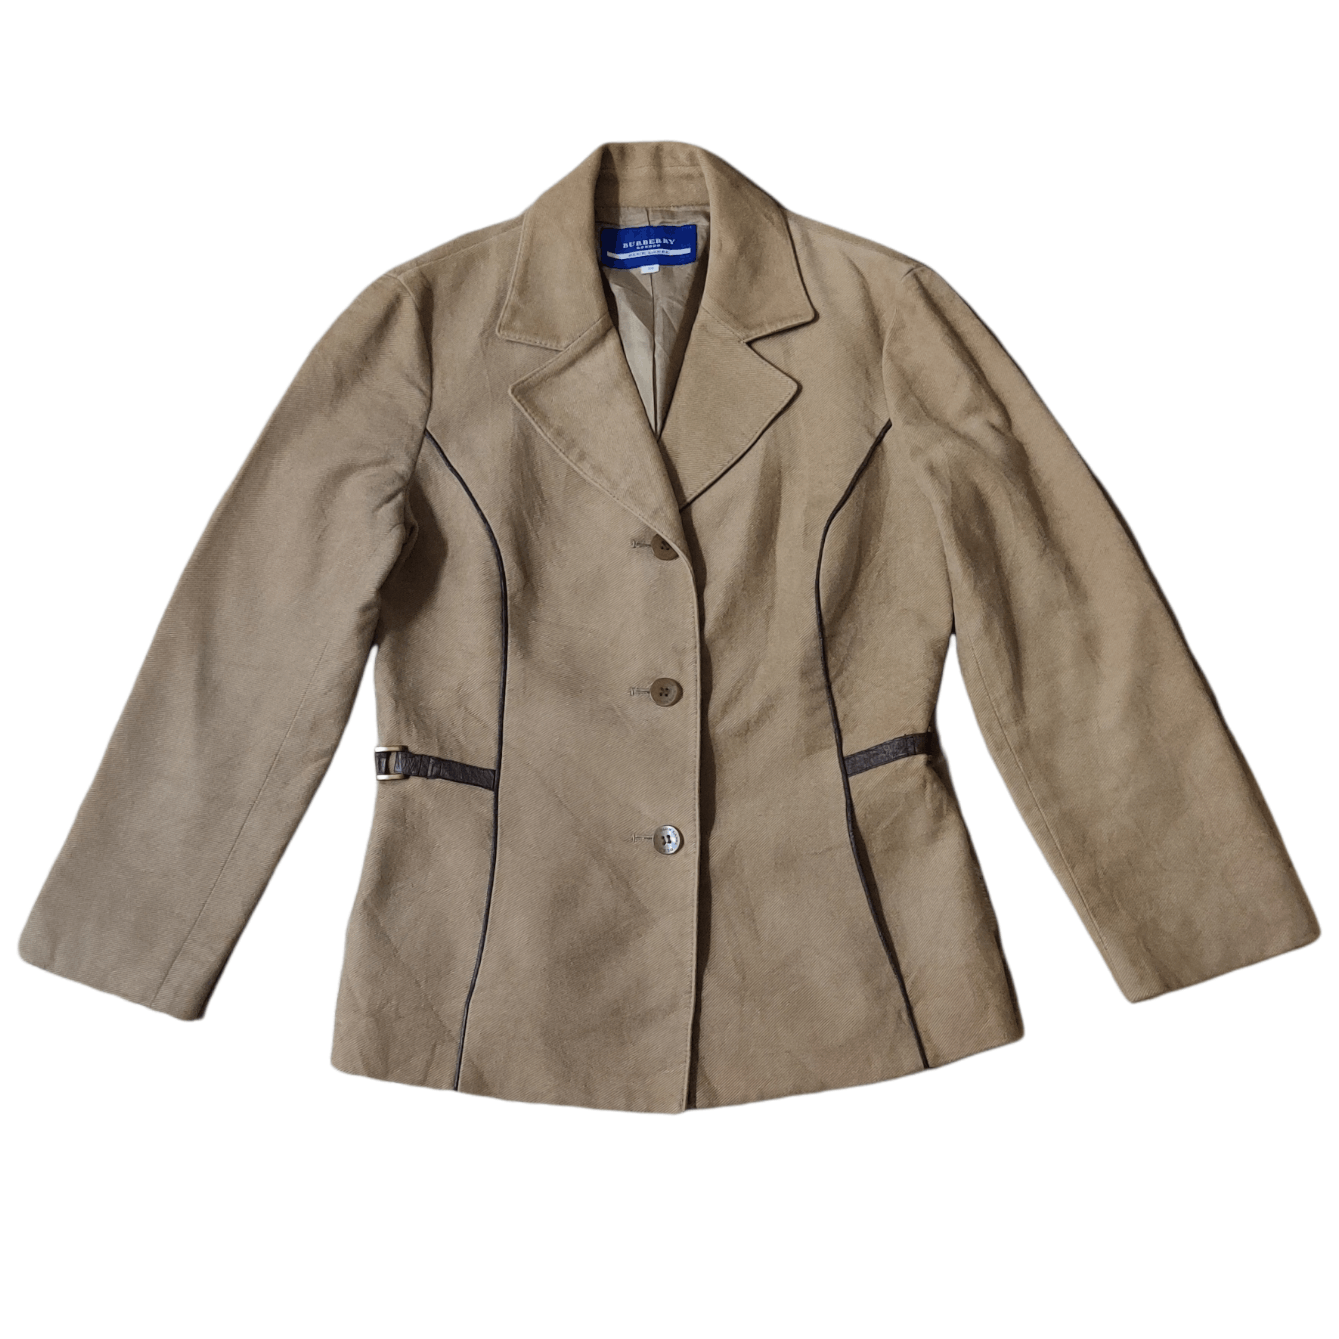 Burberry Blue Label Women's Coat Jacket - 1